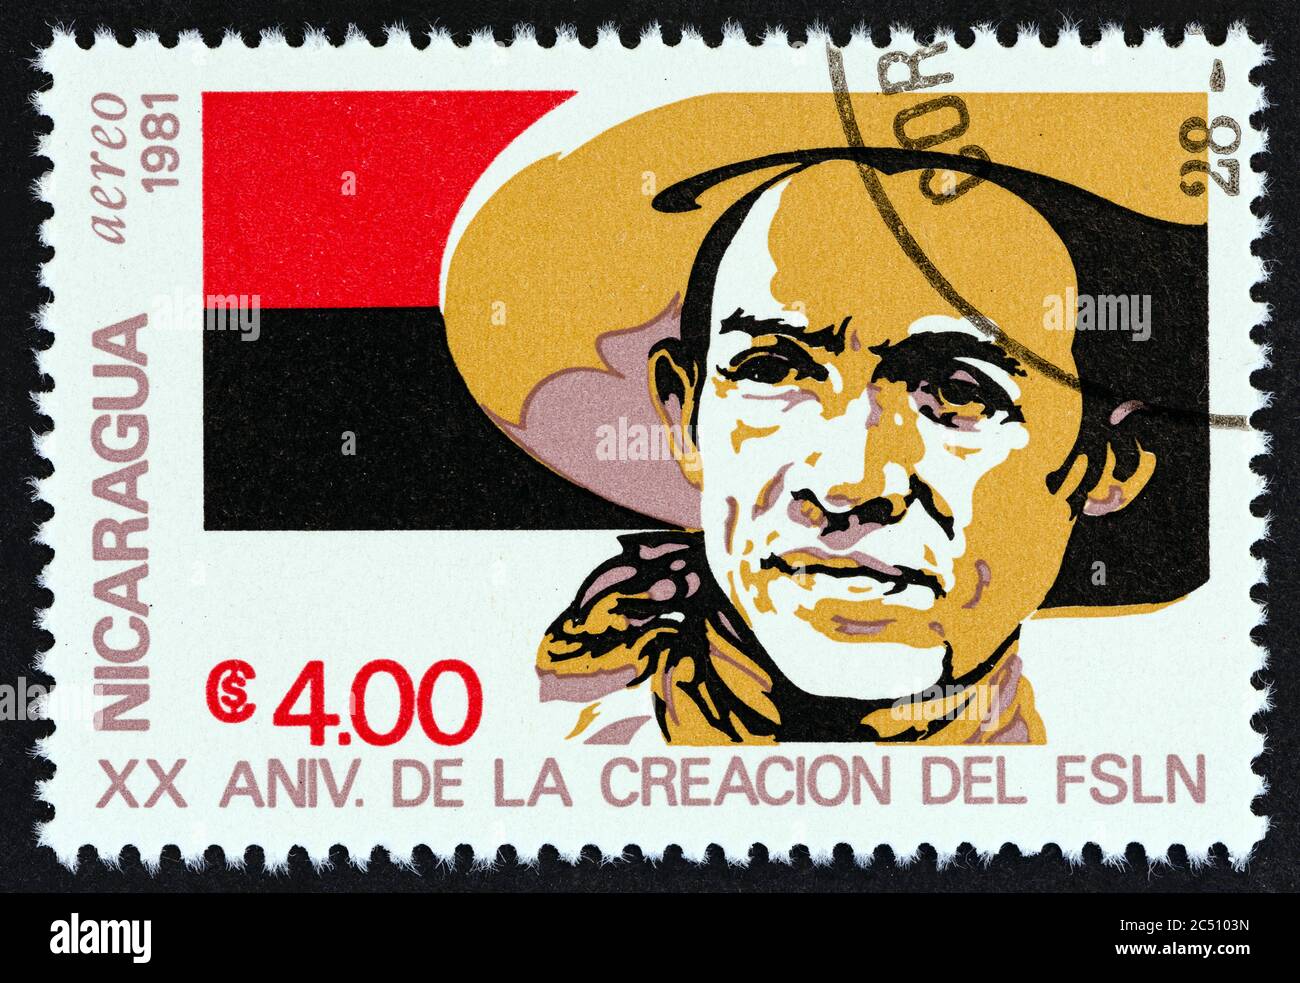 NICARAGUA - UM 1981: Eine in Nicaragua gedruckte Briefmarke zeigt Sandinista Guerrilla, um 1981. Stockfoto